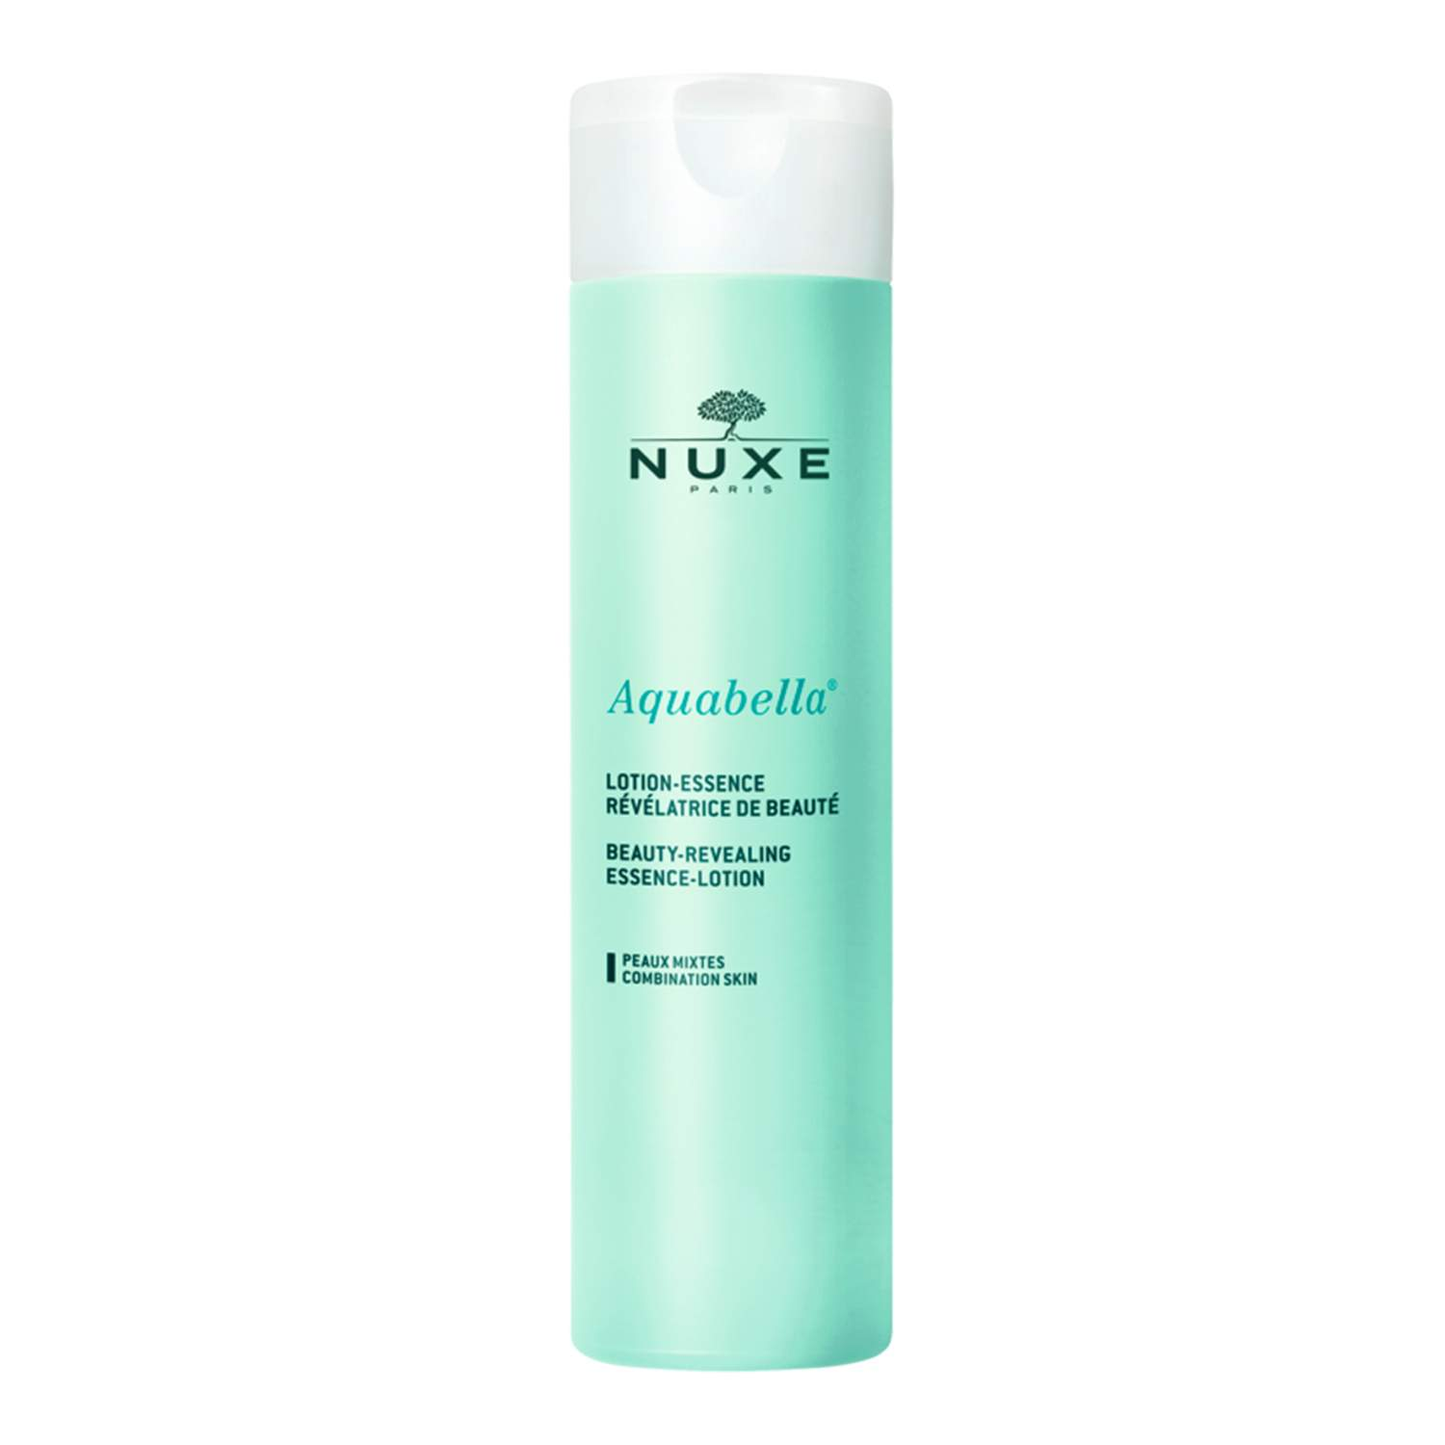 NUXE Aquabella® Beauty-Revealing Essence-Lotion